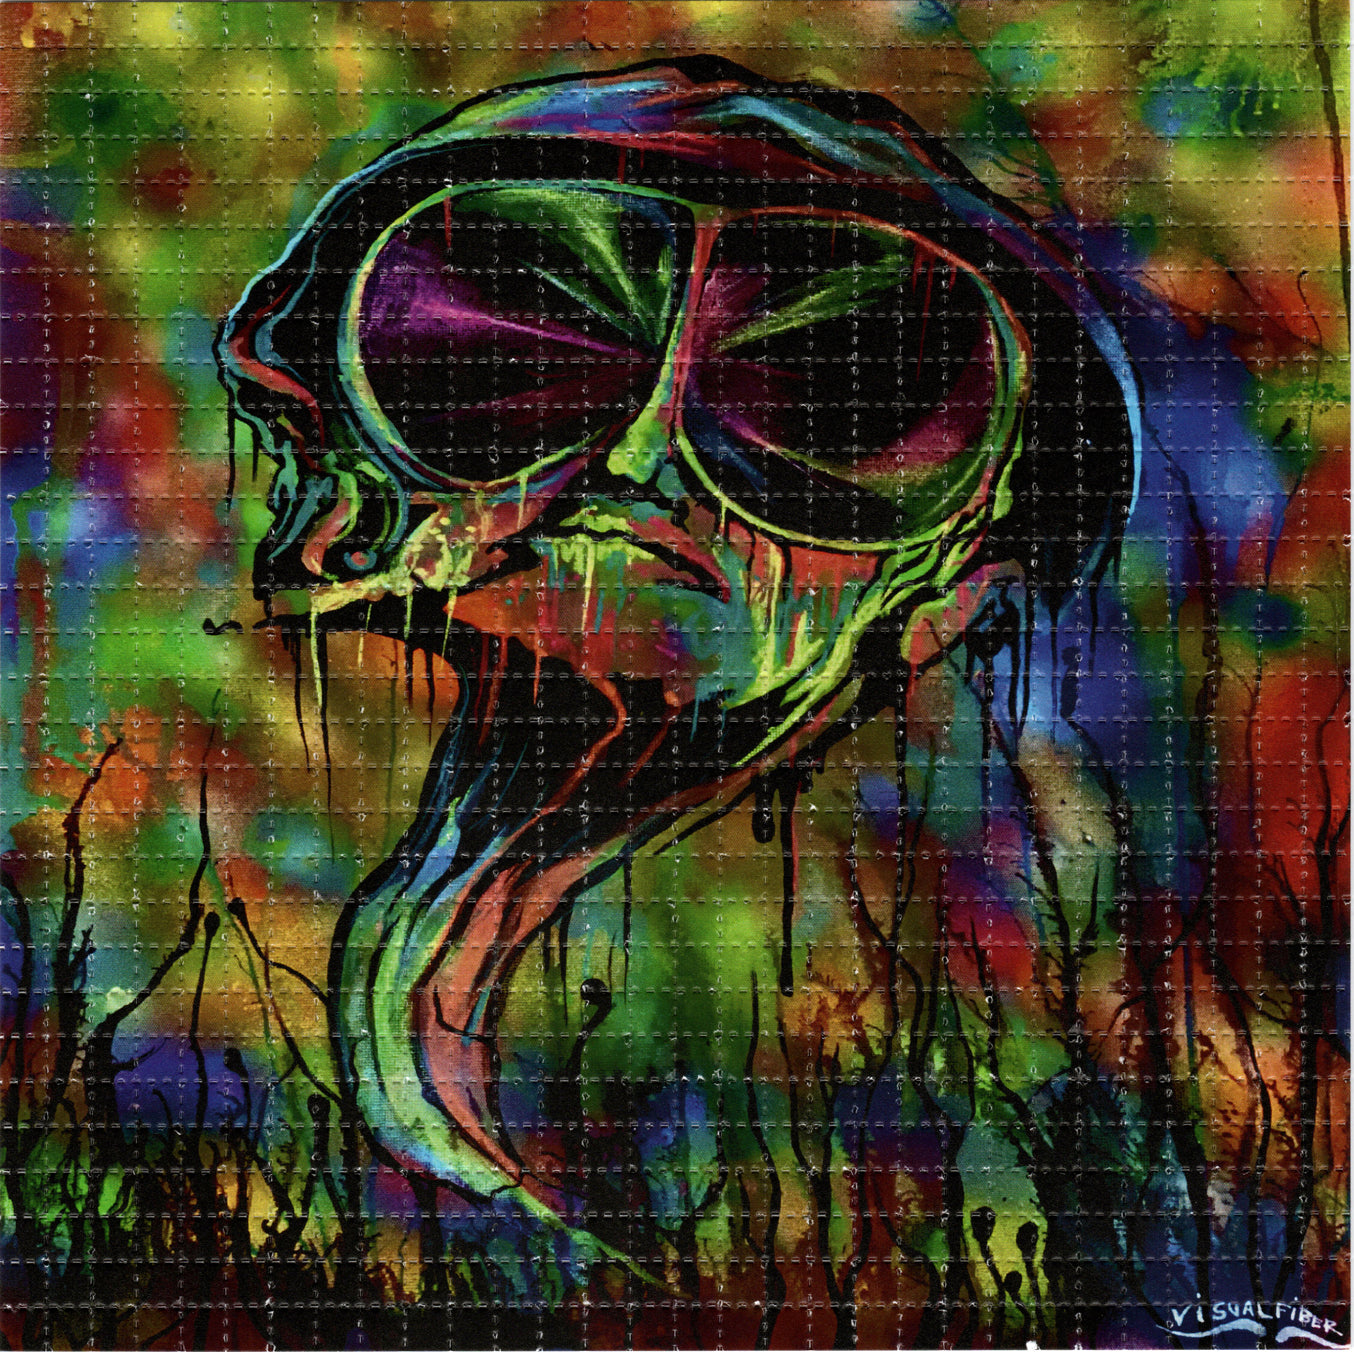 Depp Fear Loathing by Visual Fiber SIGNED Limited Edition LSD blotter art print